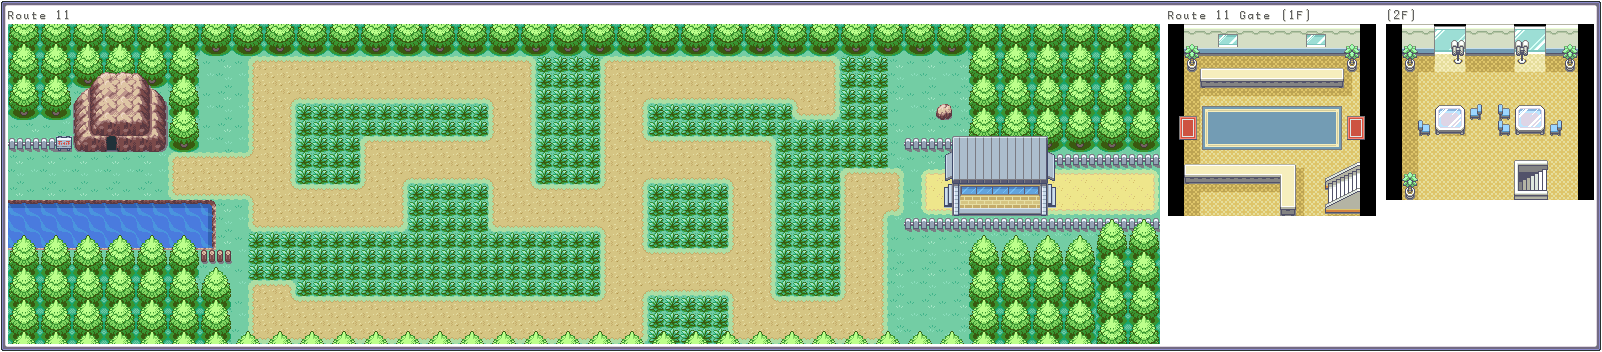 Pokémon FireRed / LeafGreen - Route 11